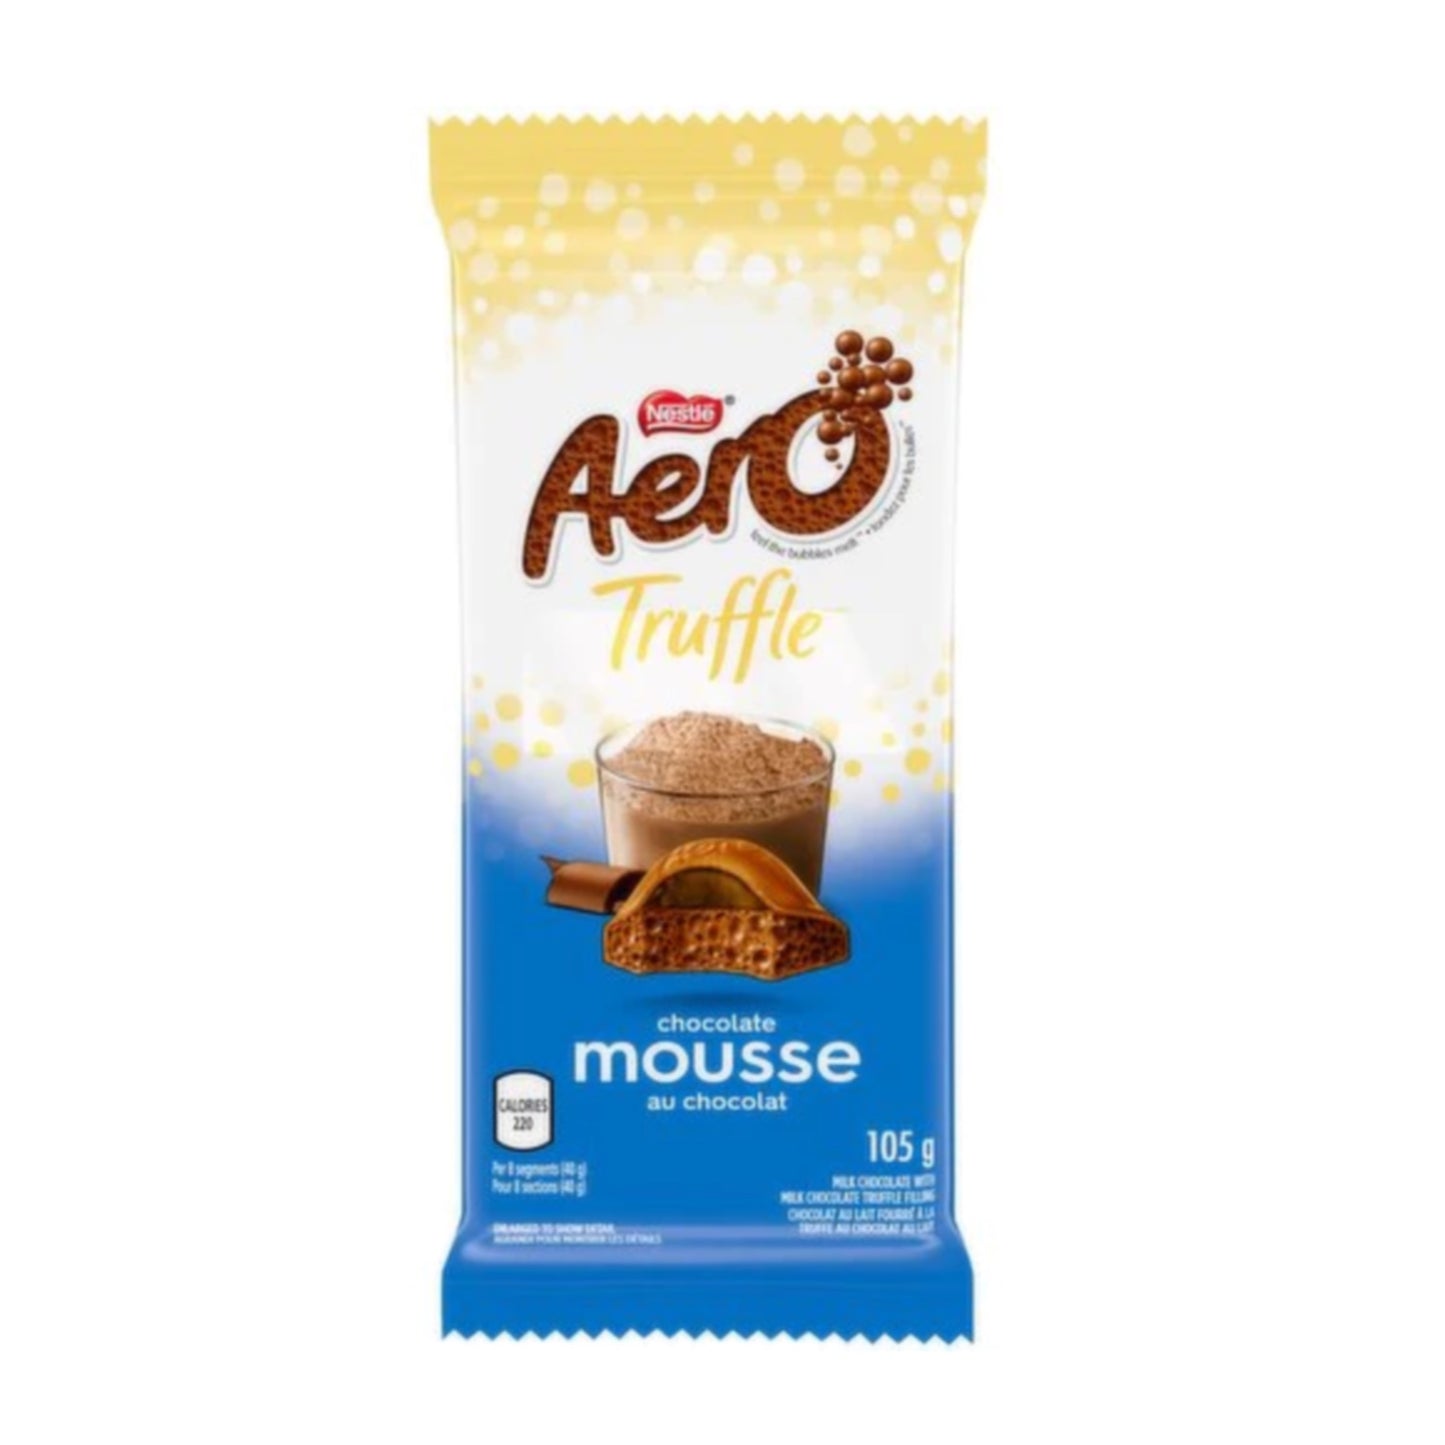 Aero Truffle Chocolate Mousse Tablet